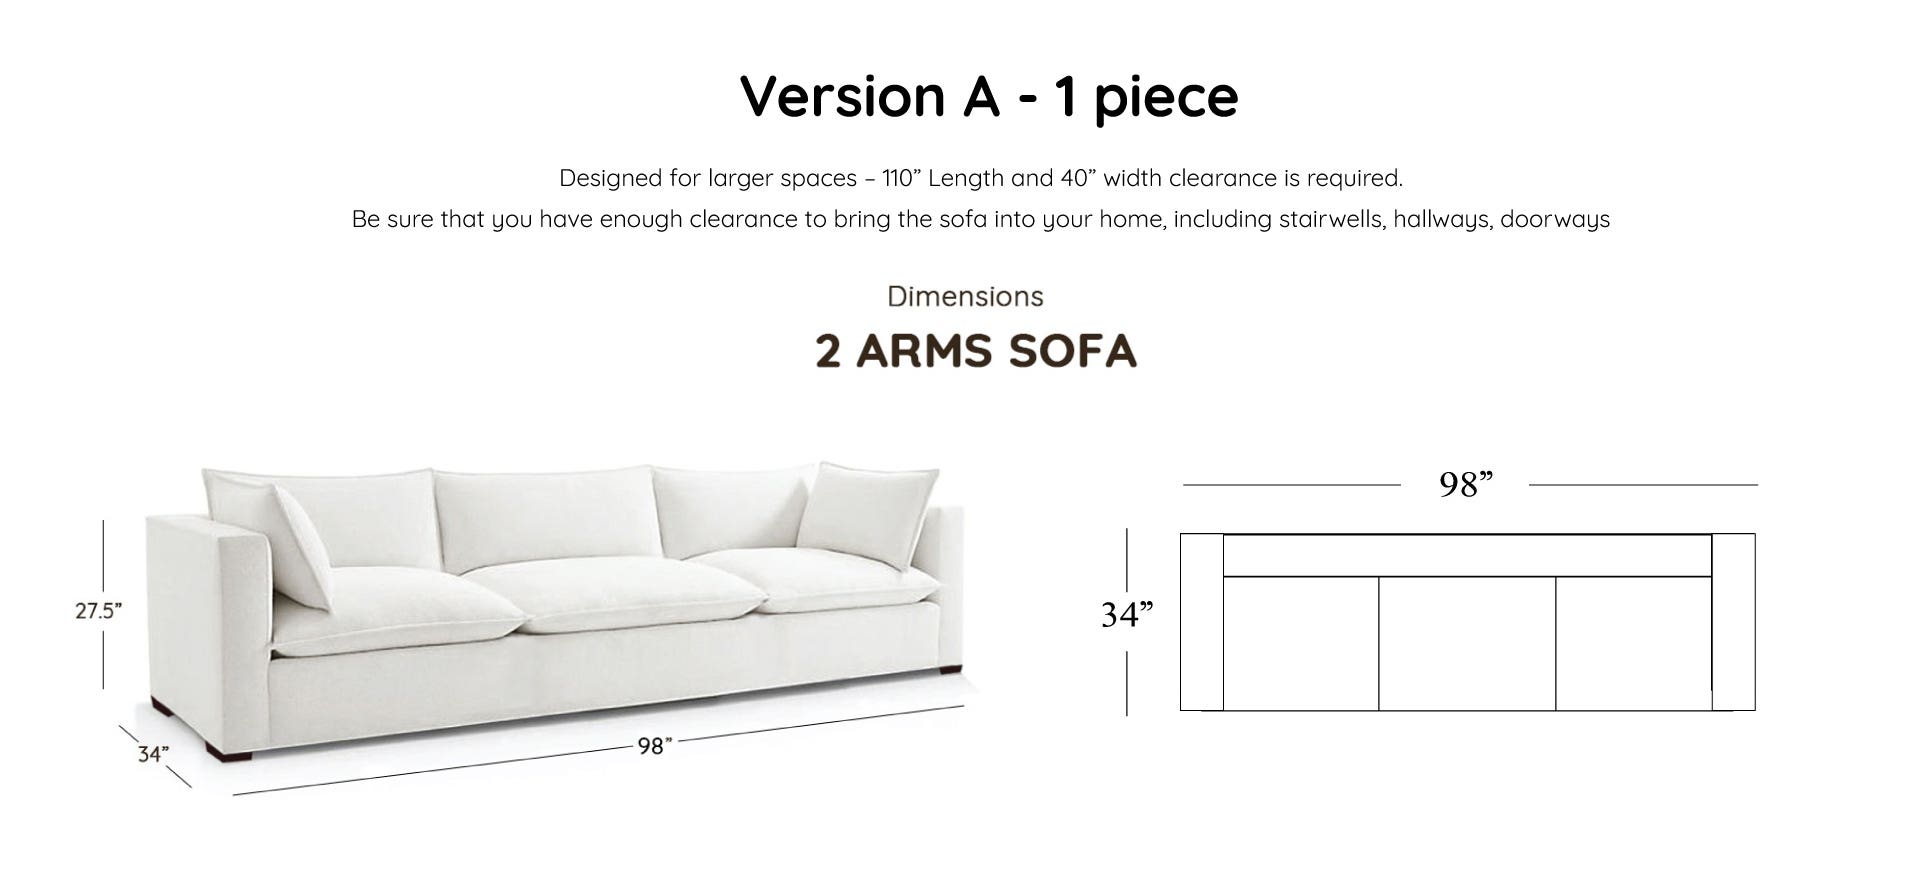 2 arms sofa